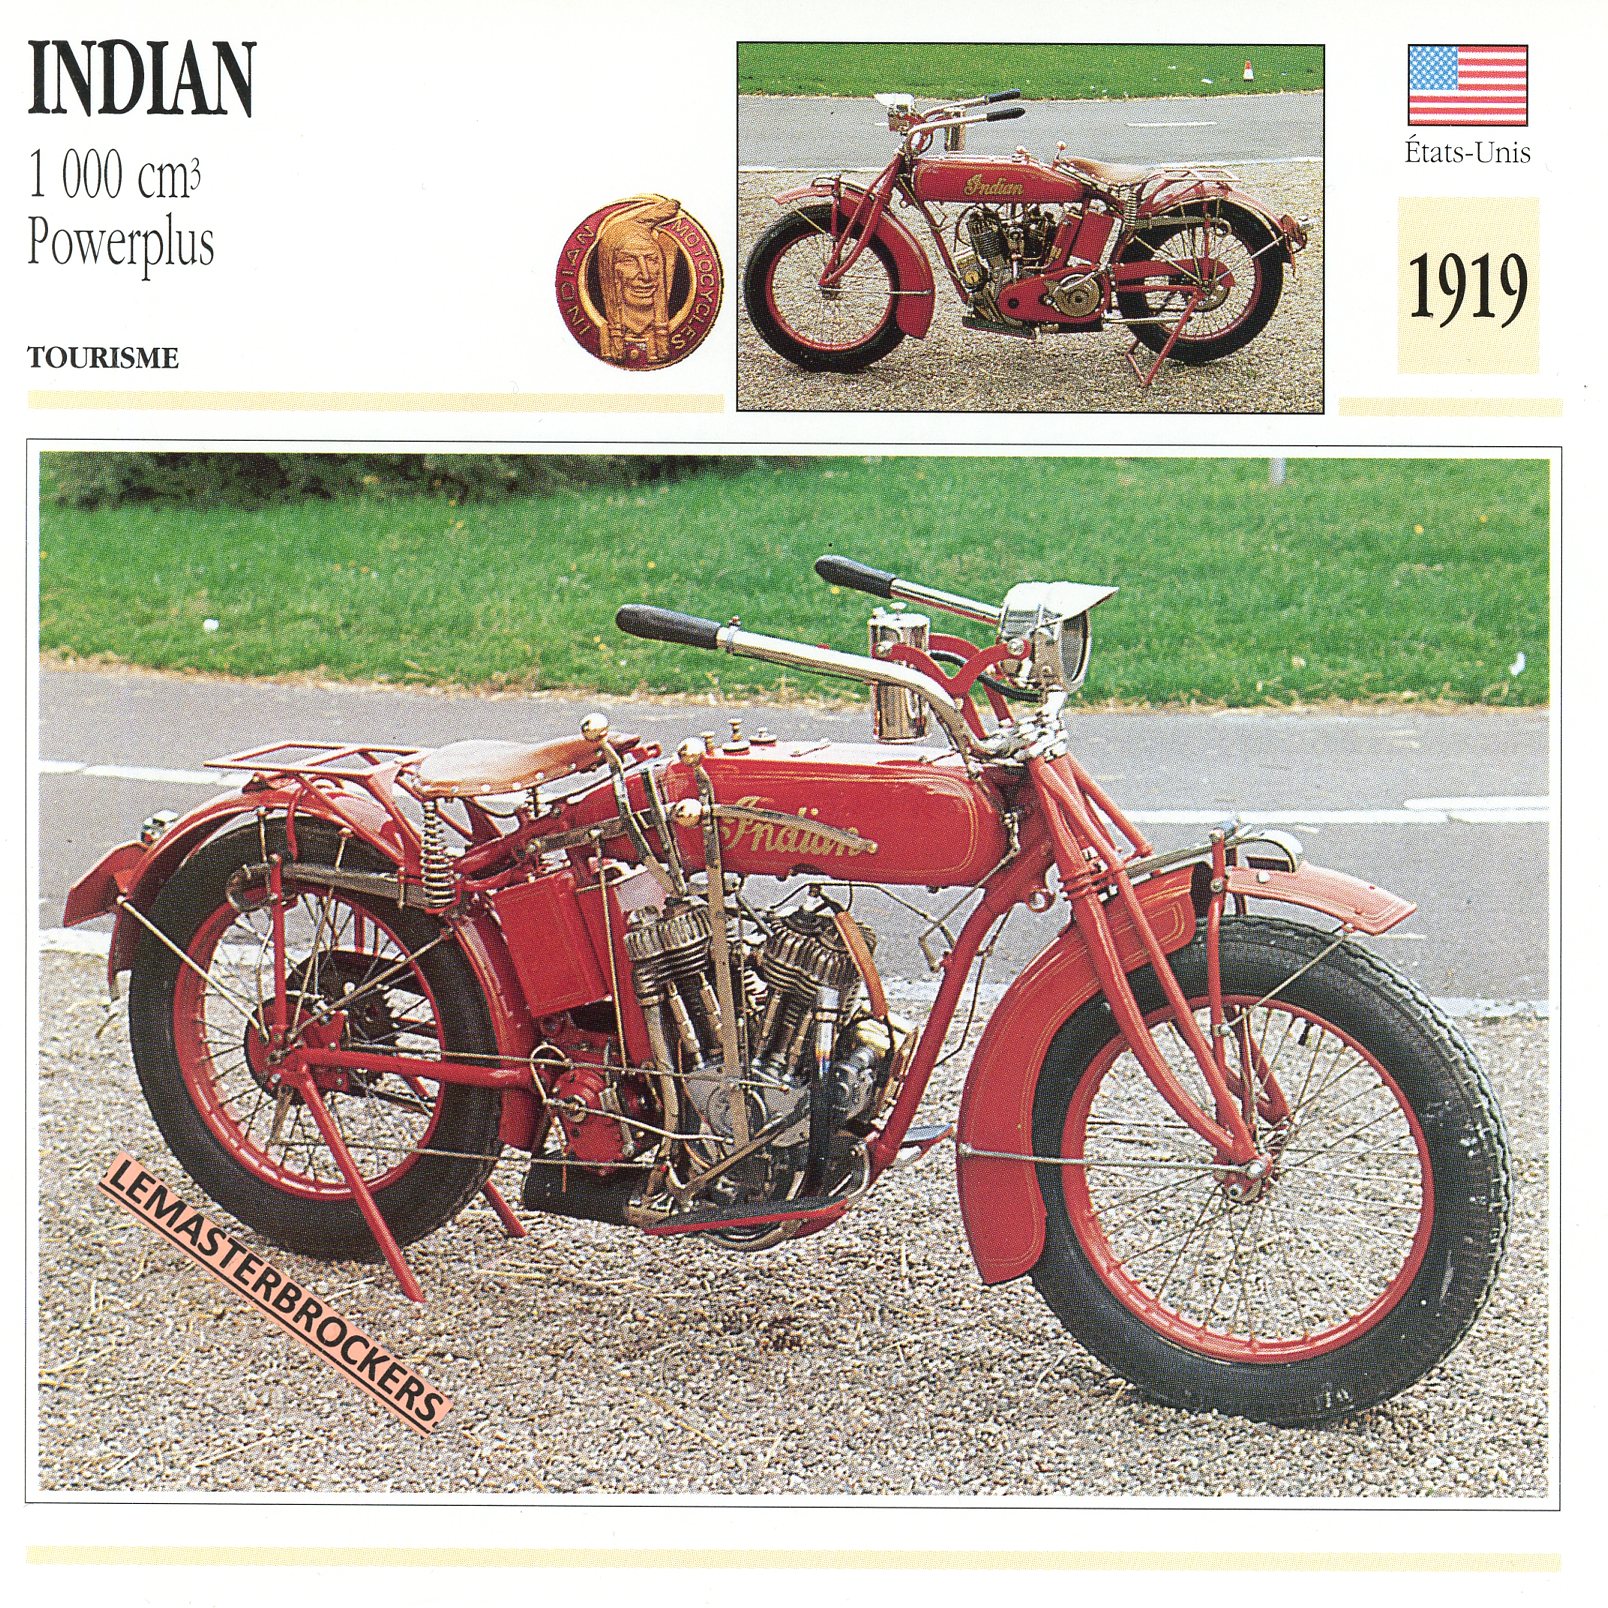 FICHE-MOTO-INDIAN-POWERPLUS-1919-LEMASTERBROCKERS-CARD-MOTORCYCLE